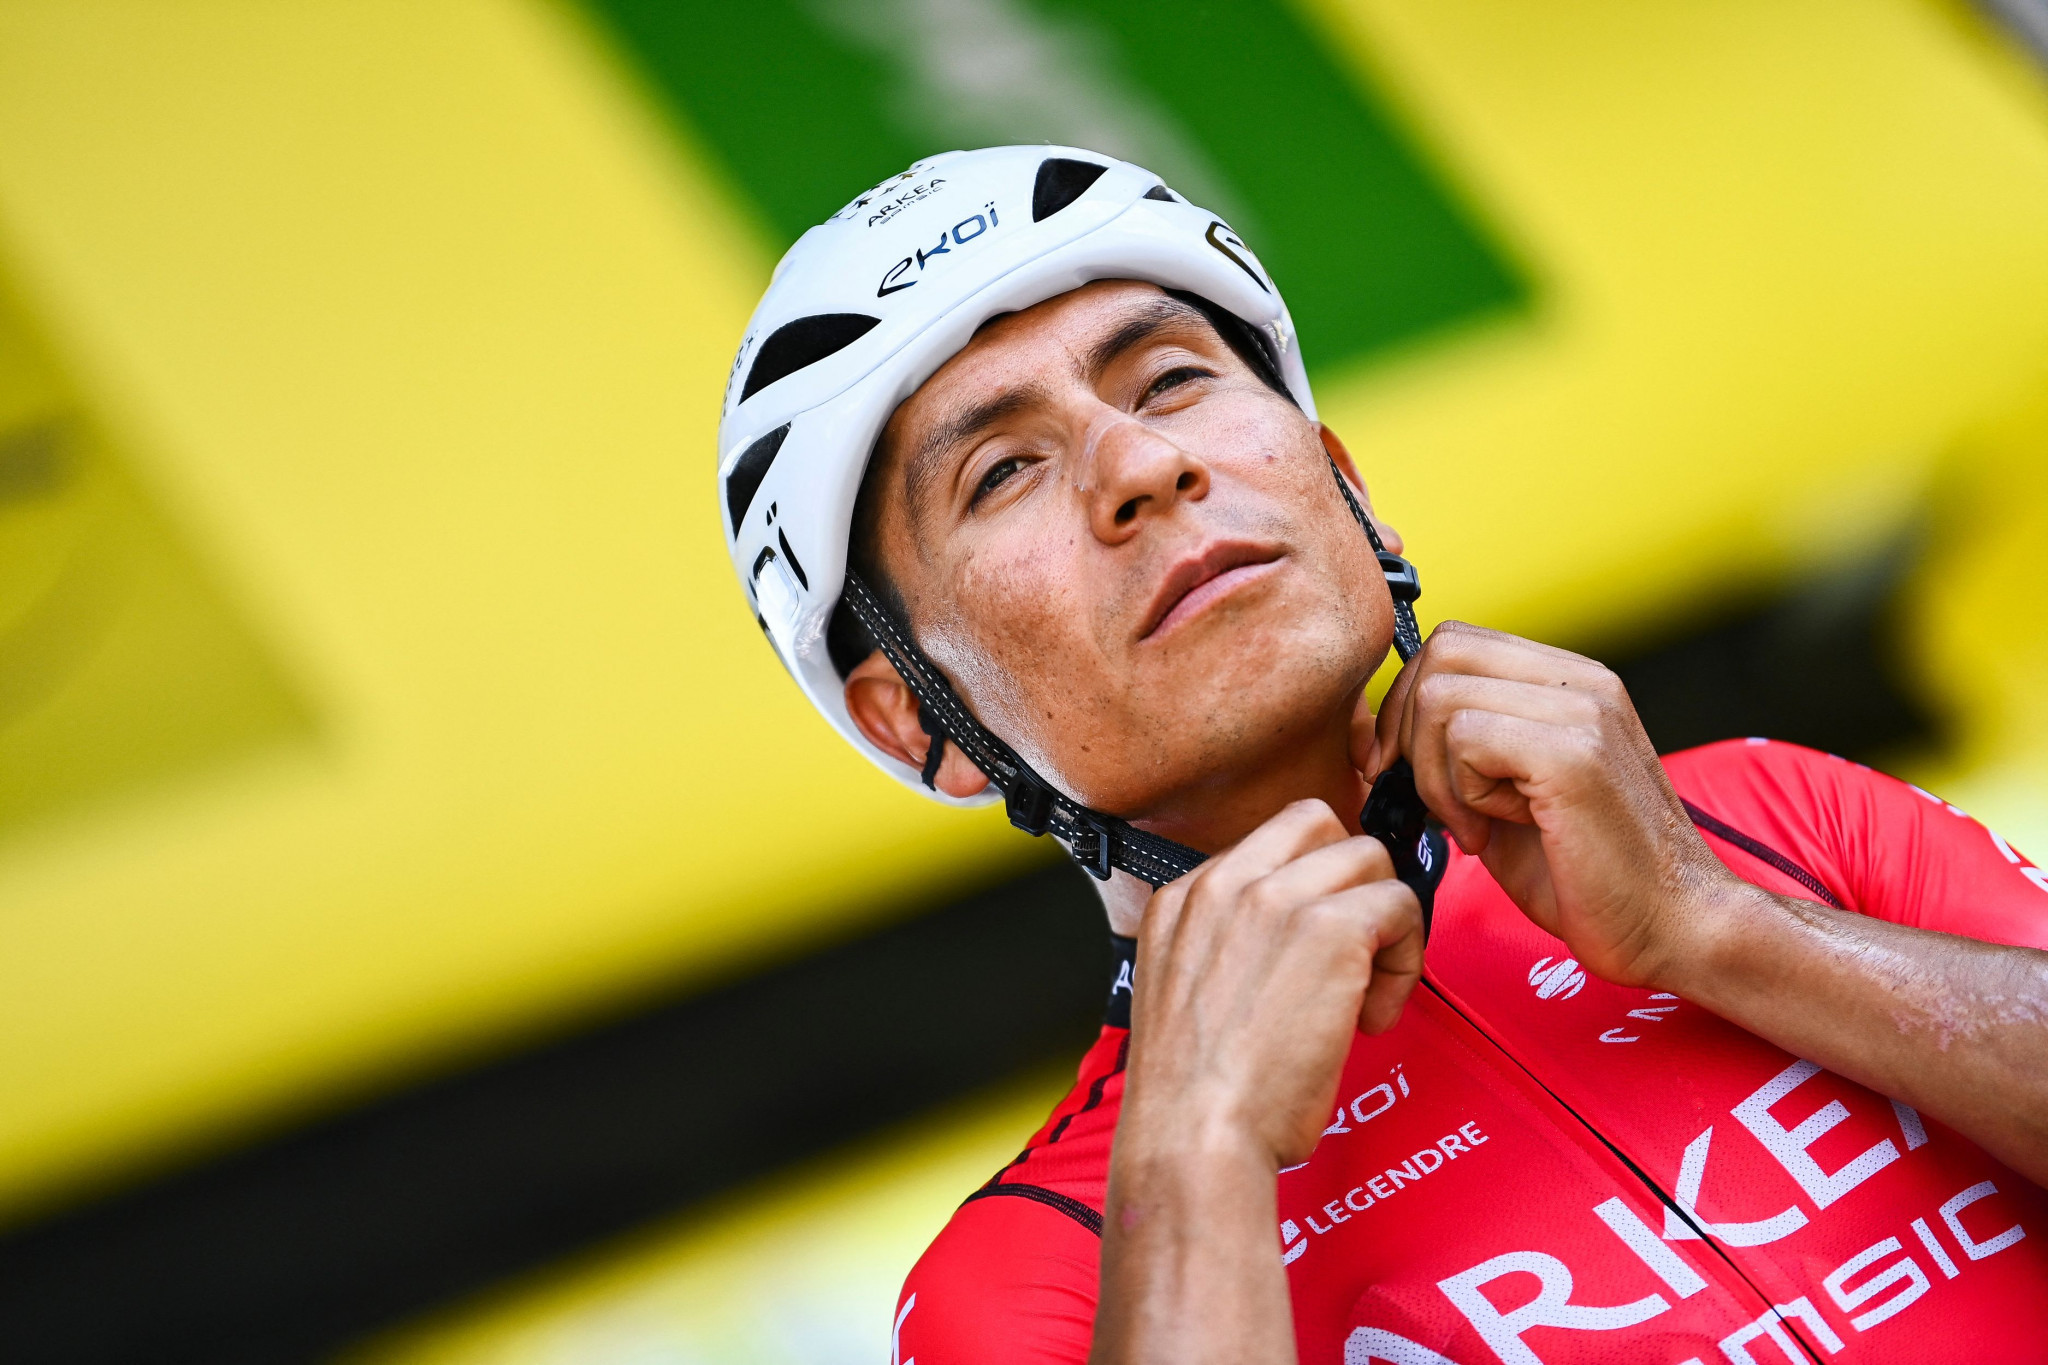 Quintana's appeal against Tour de France tramadol disqualification dismissed